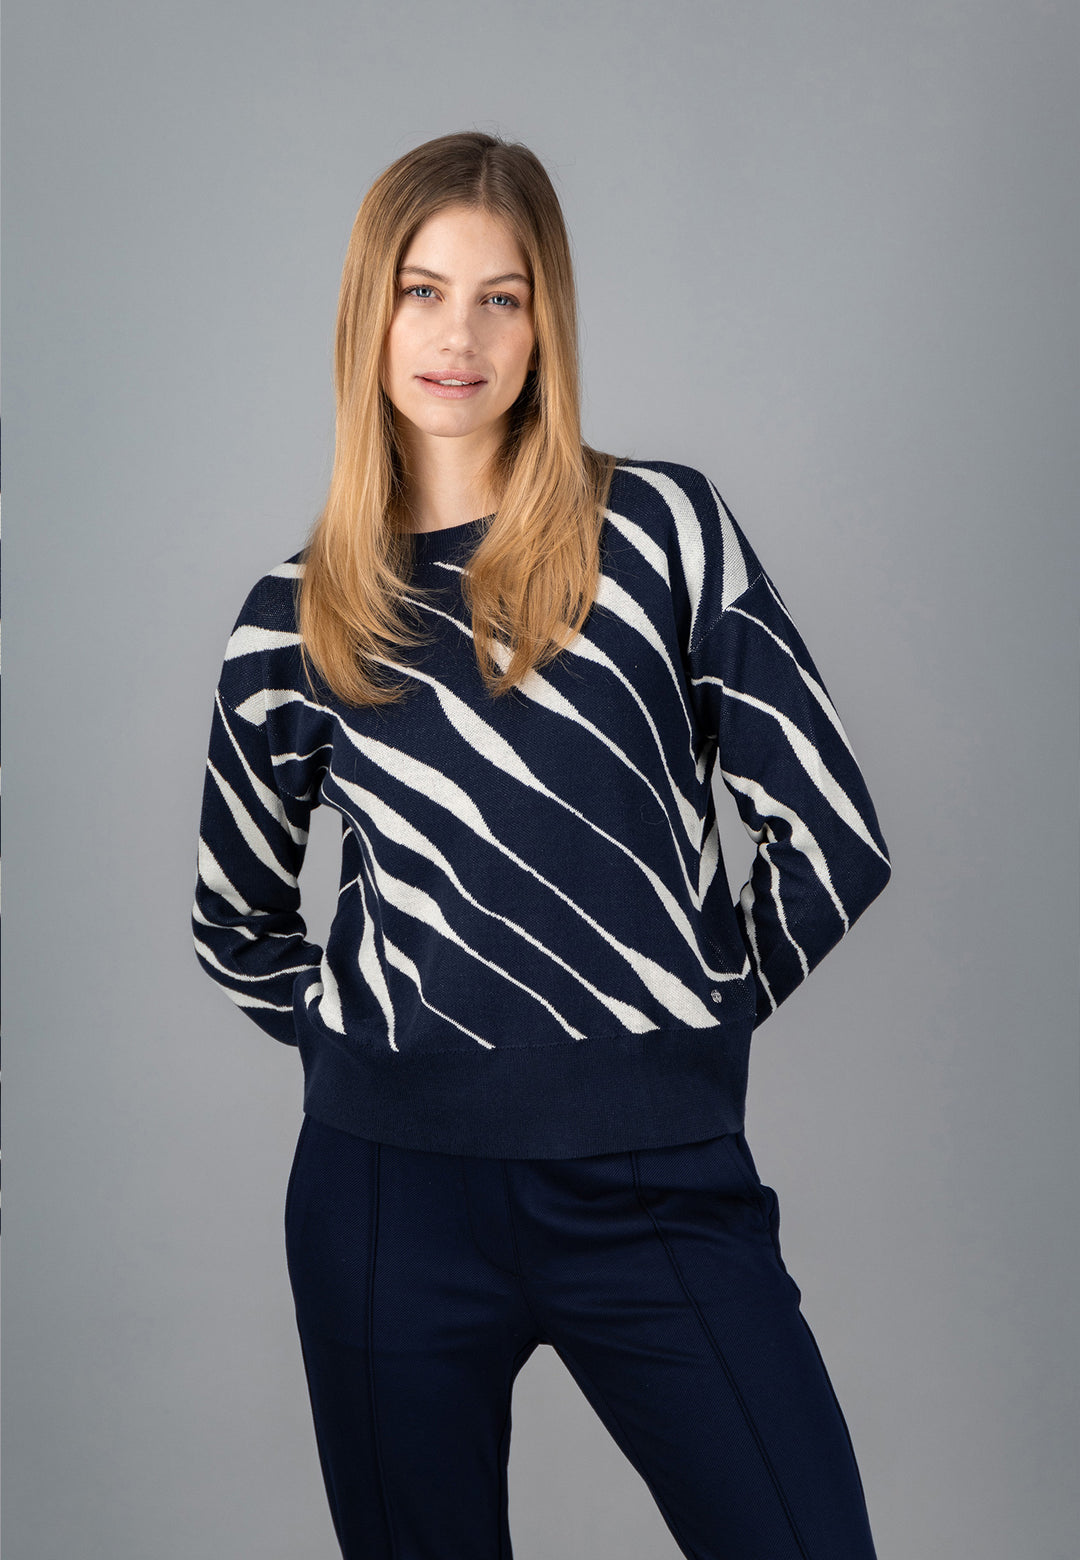 & Offizieller | Online – Ladies Online Fynch-Hatton Official Shop FYNCH- HATTON Sweaters Cardigans Shop |